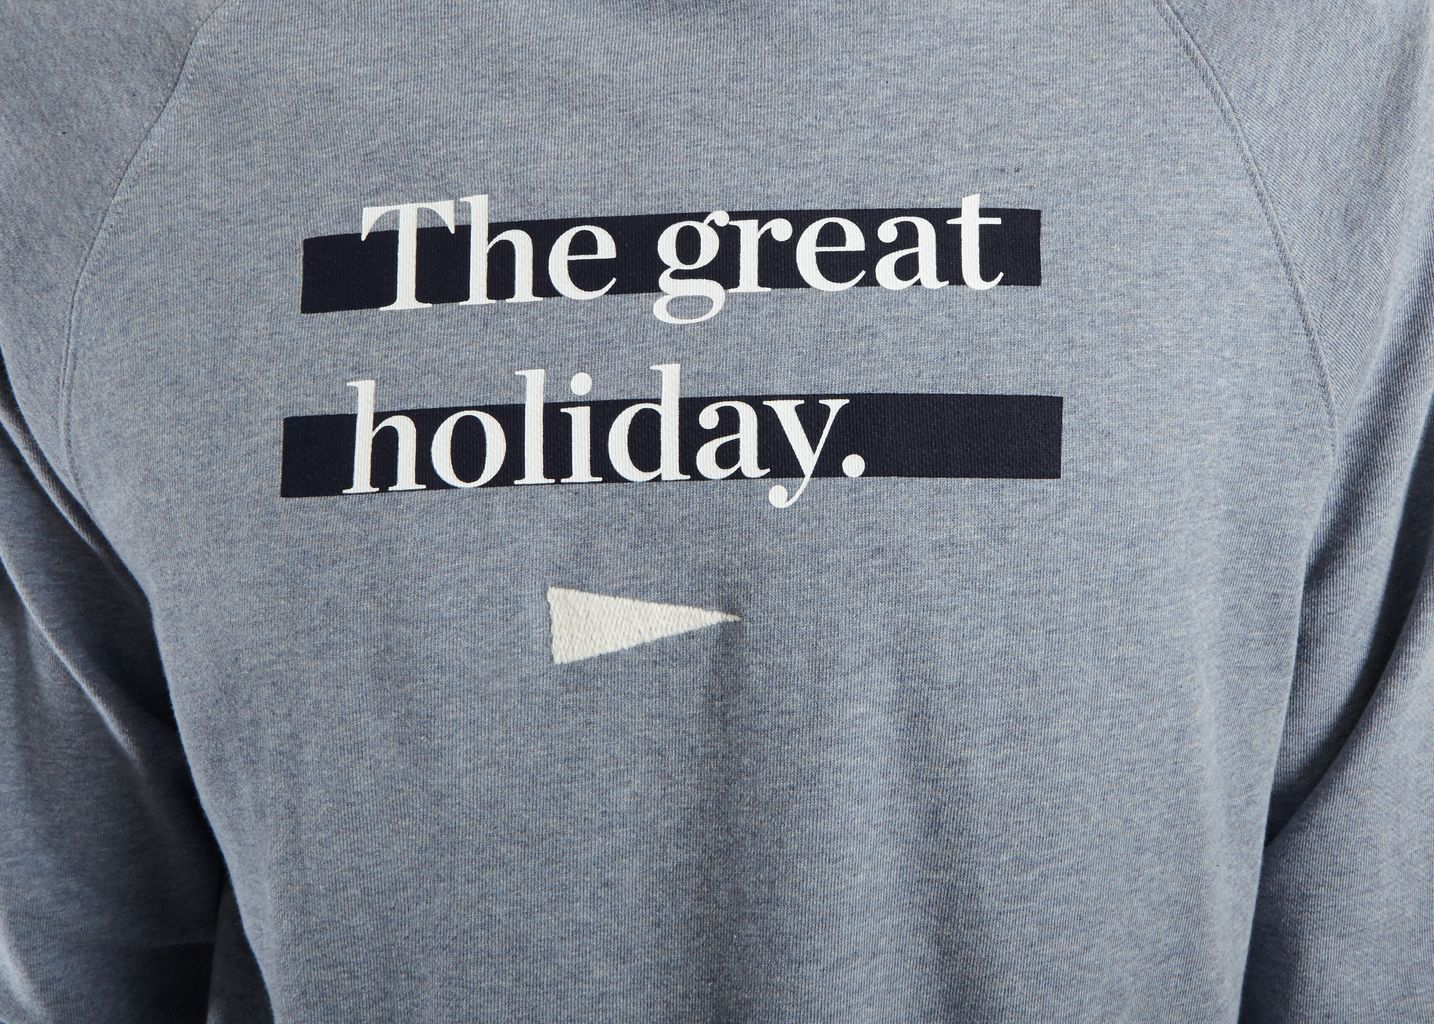 The Great Holiday Sweatshirt - Cuisse de Grenouille